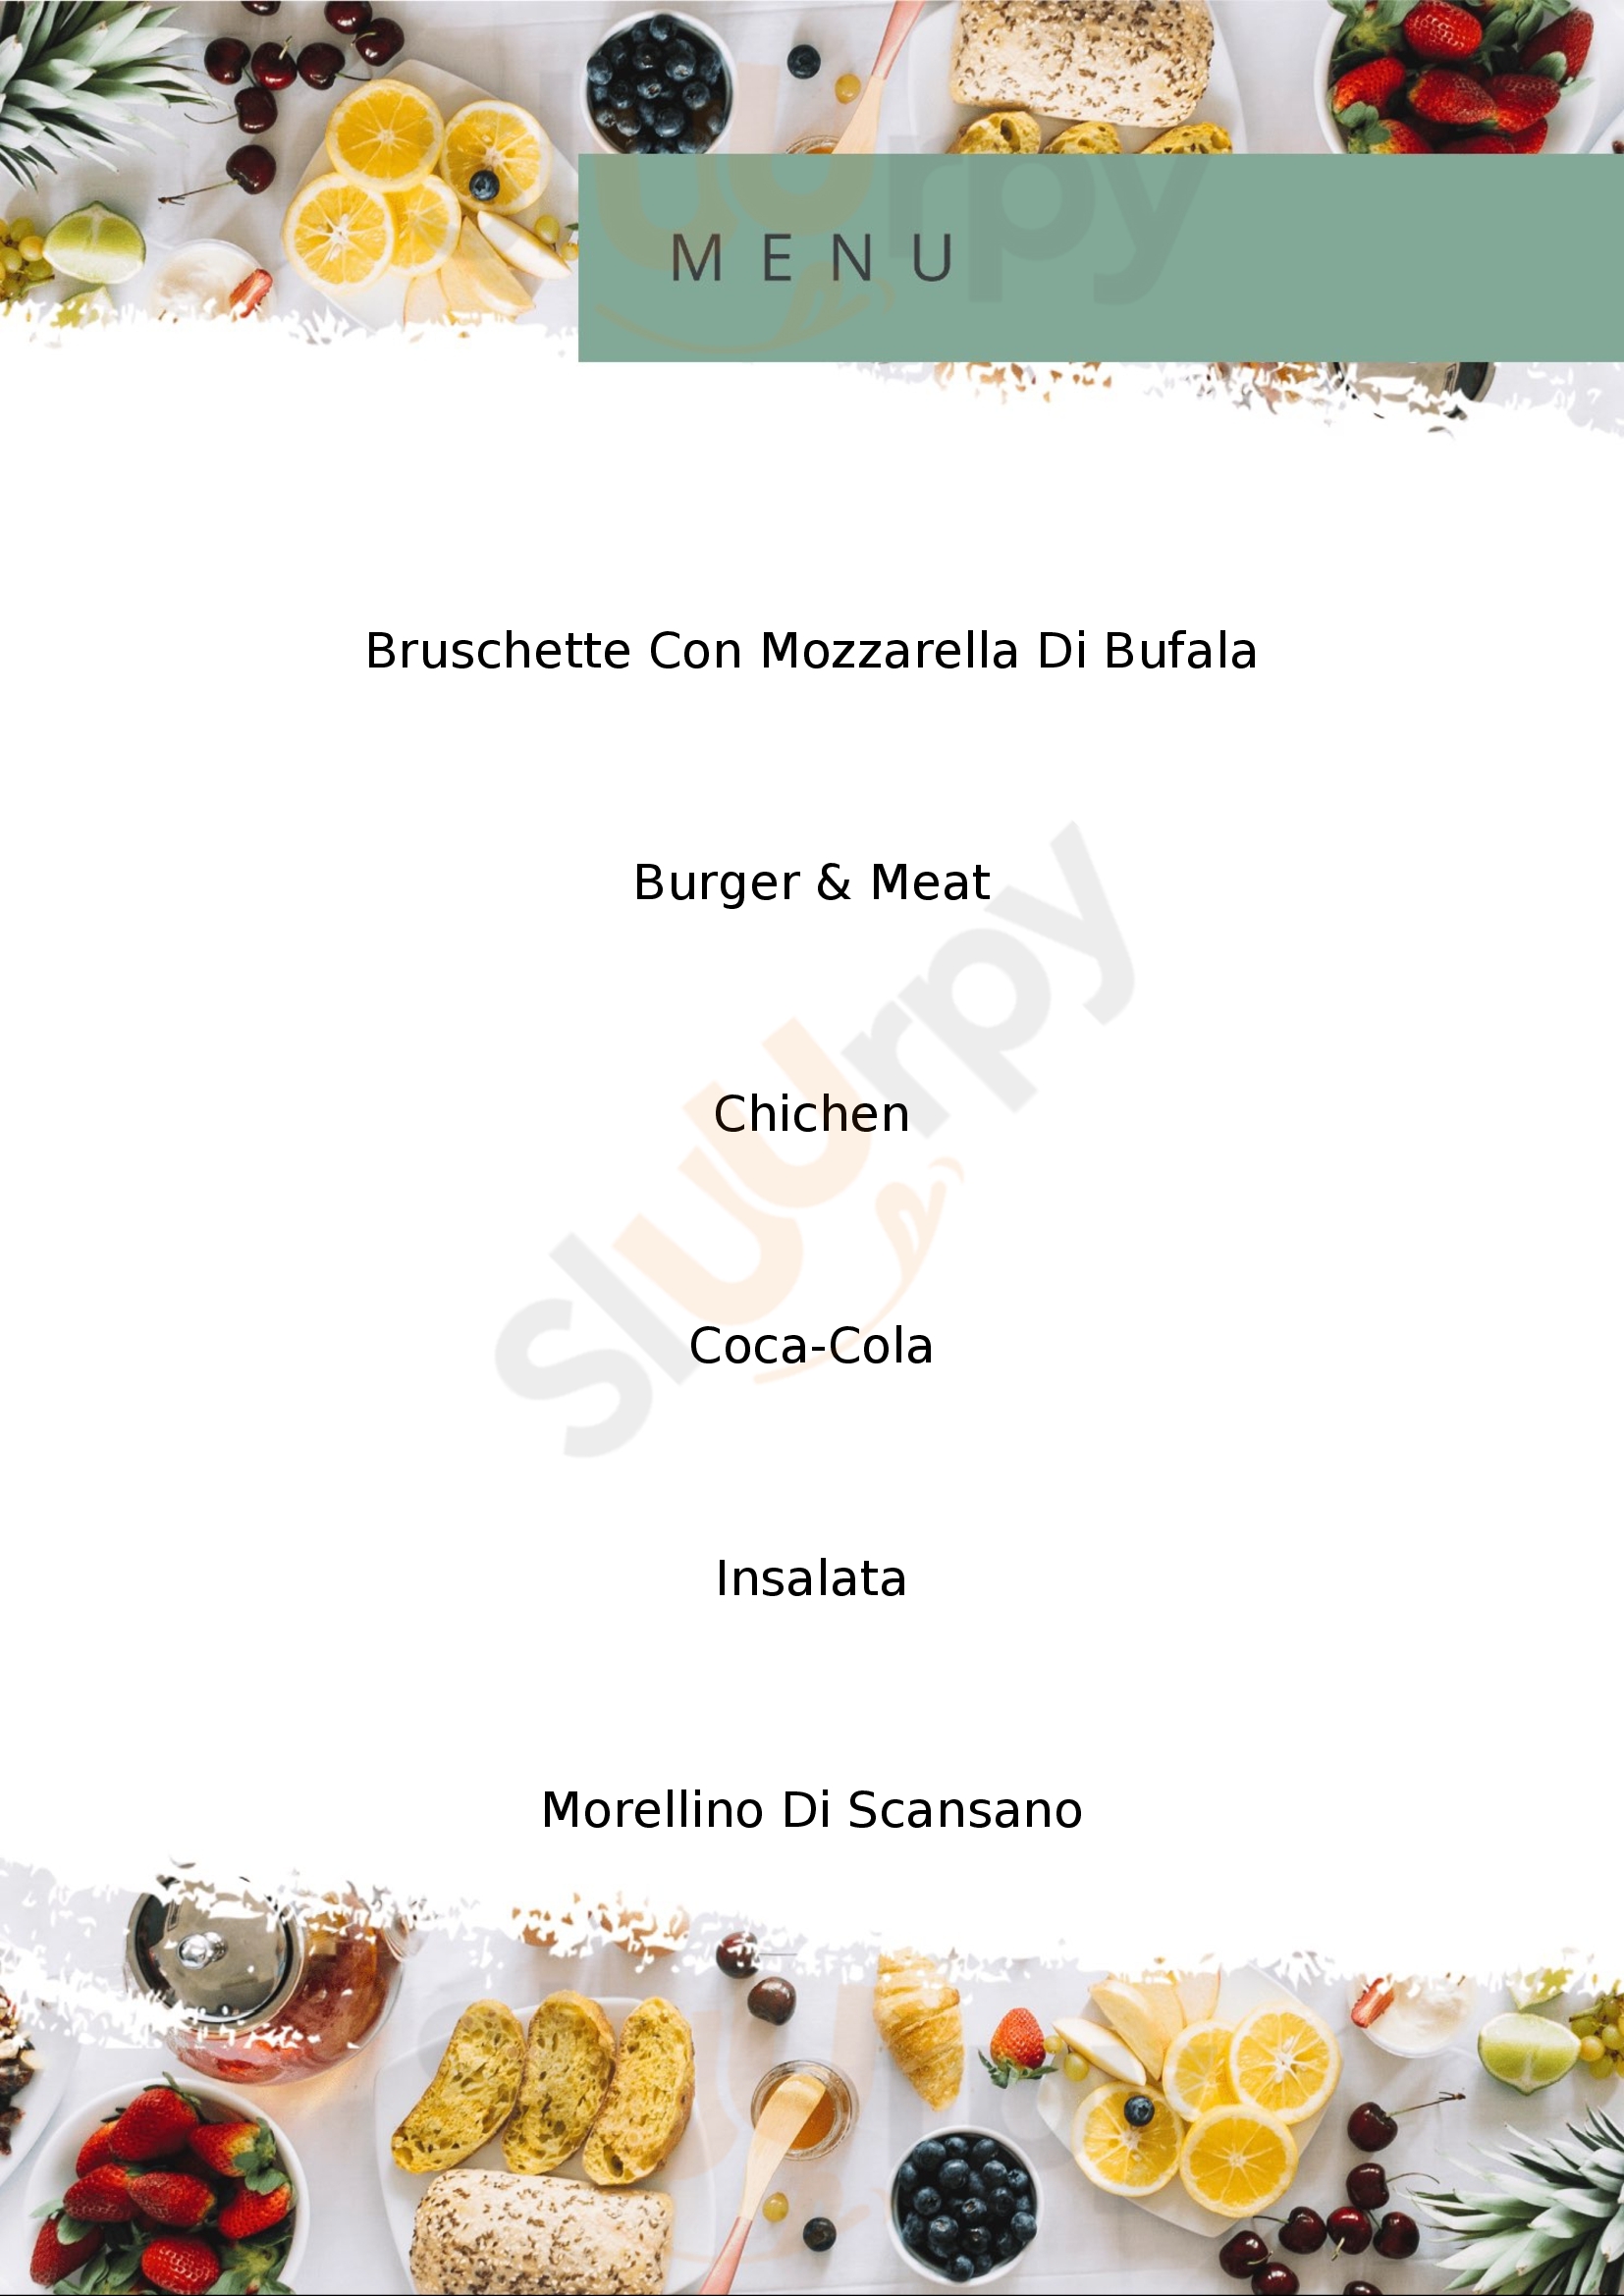 Ham Holy Burger - Serravalle Designer Outlet Serravalle Scrivia menù 1 pagina